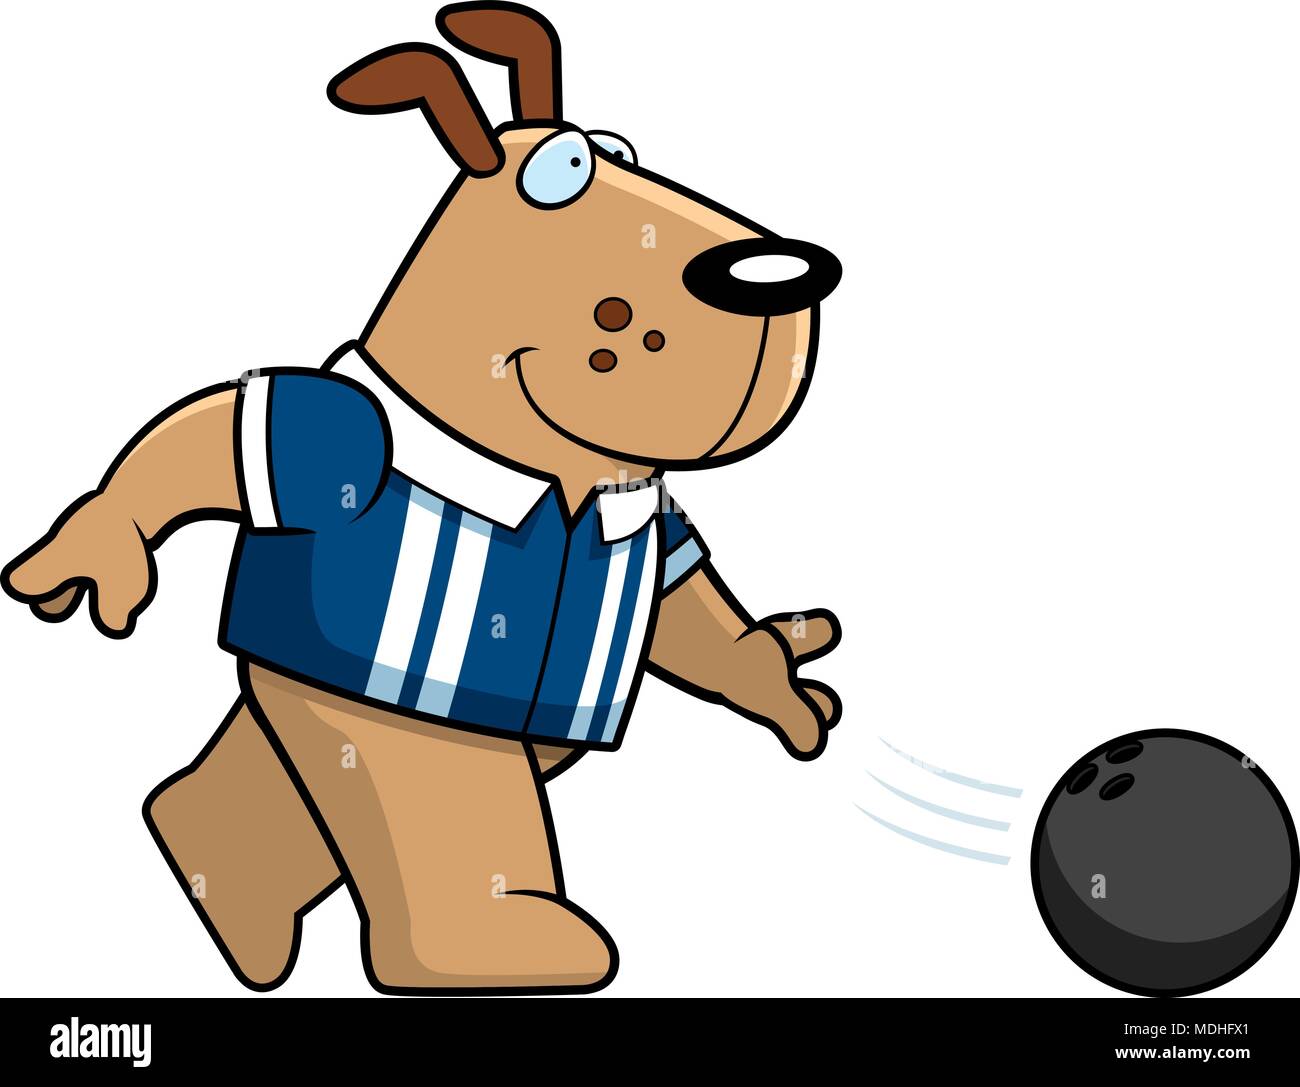 A cartoon illustration of a dog bowling a ball. Stock Vector